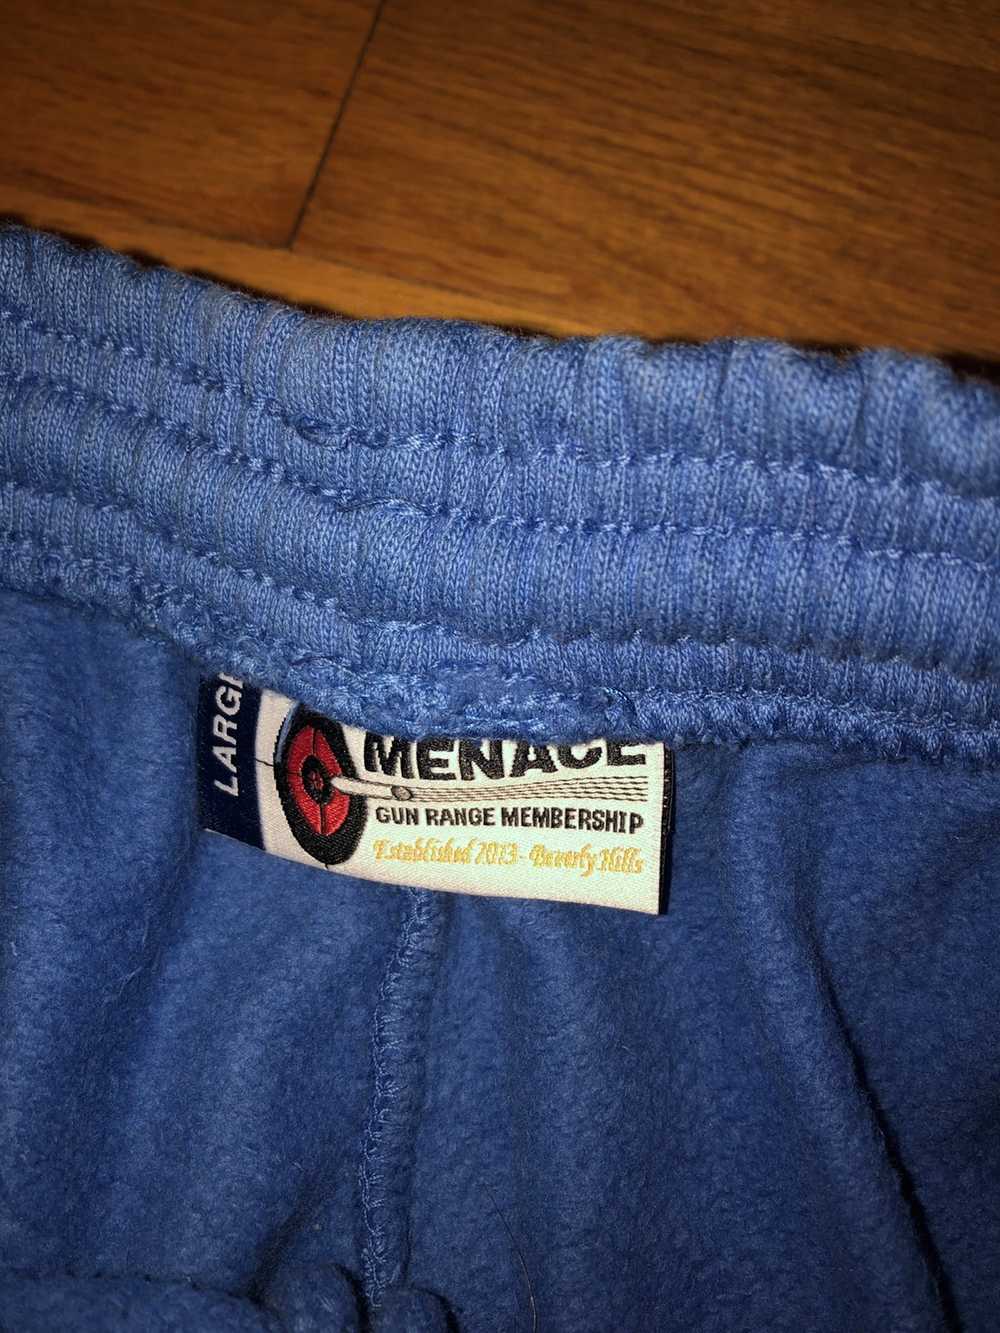 Menace Gun range member sweats - image 3